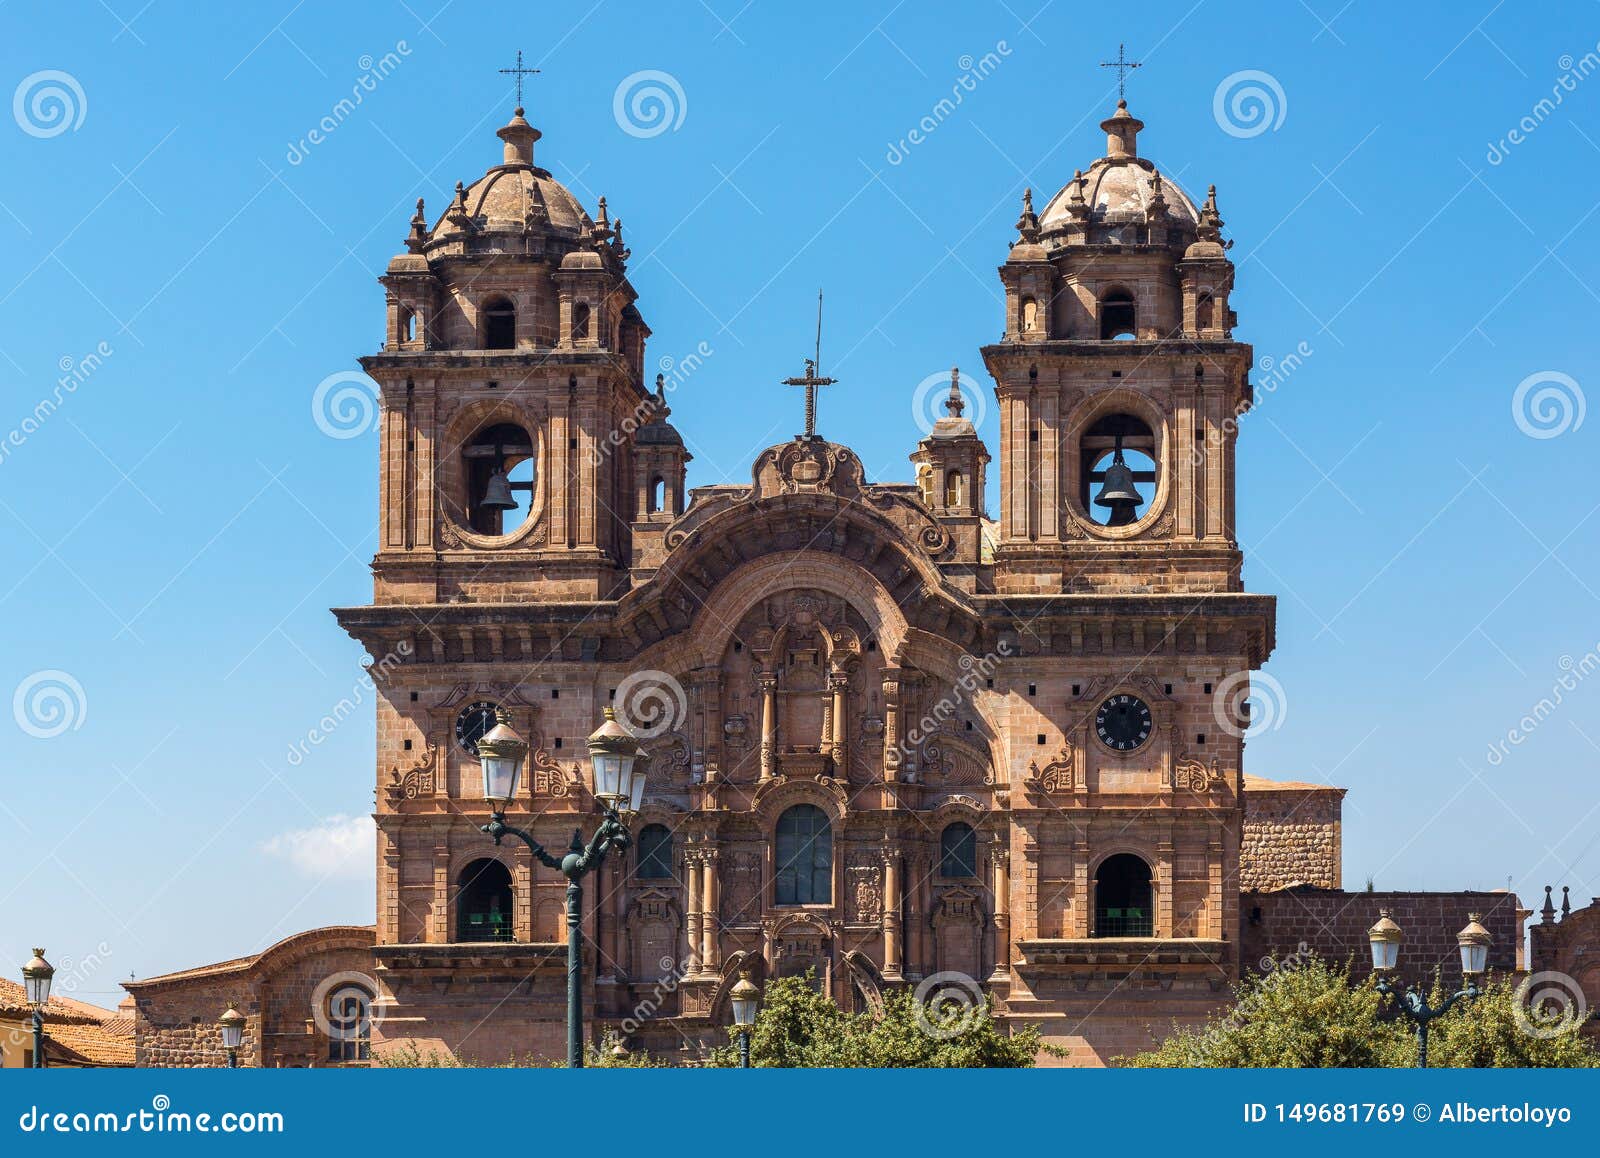 church of the society of jesus of cusco, peru